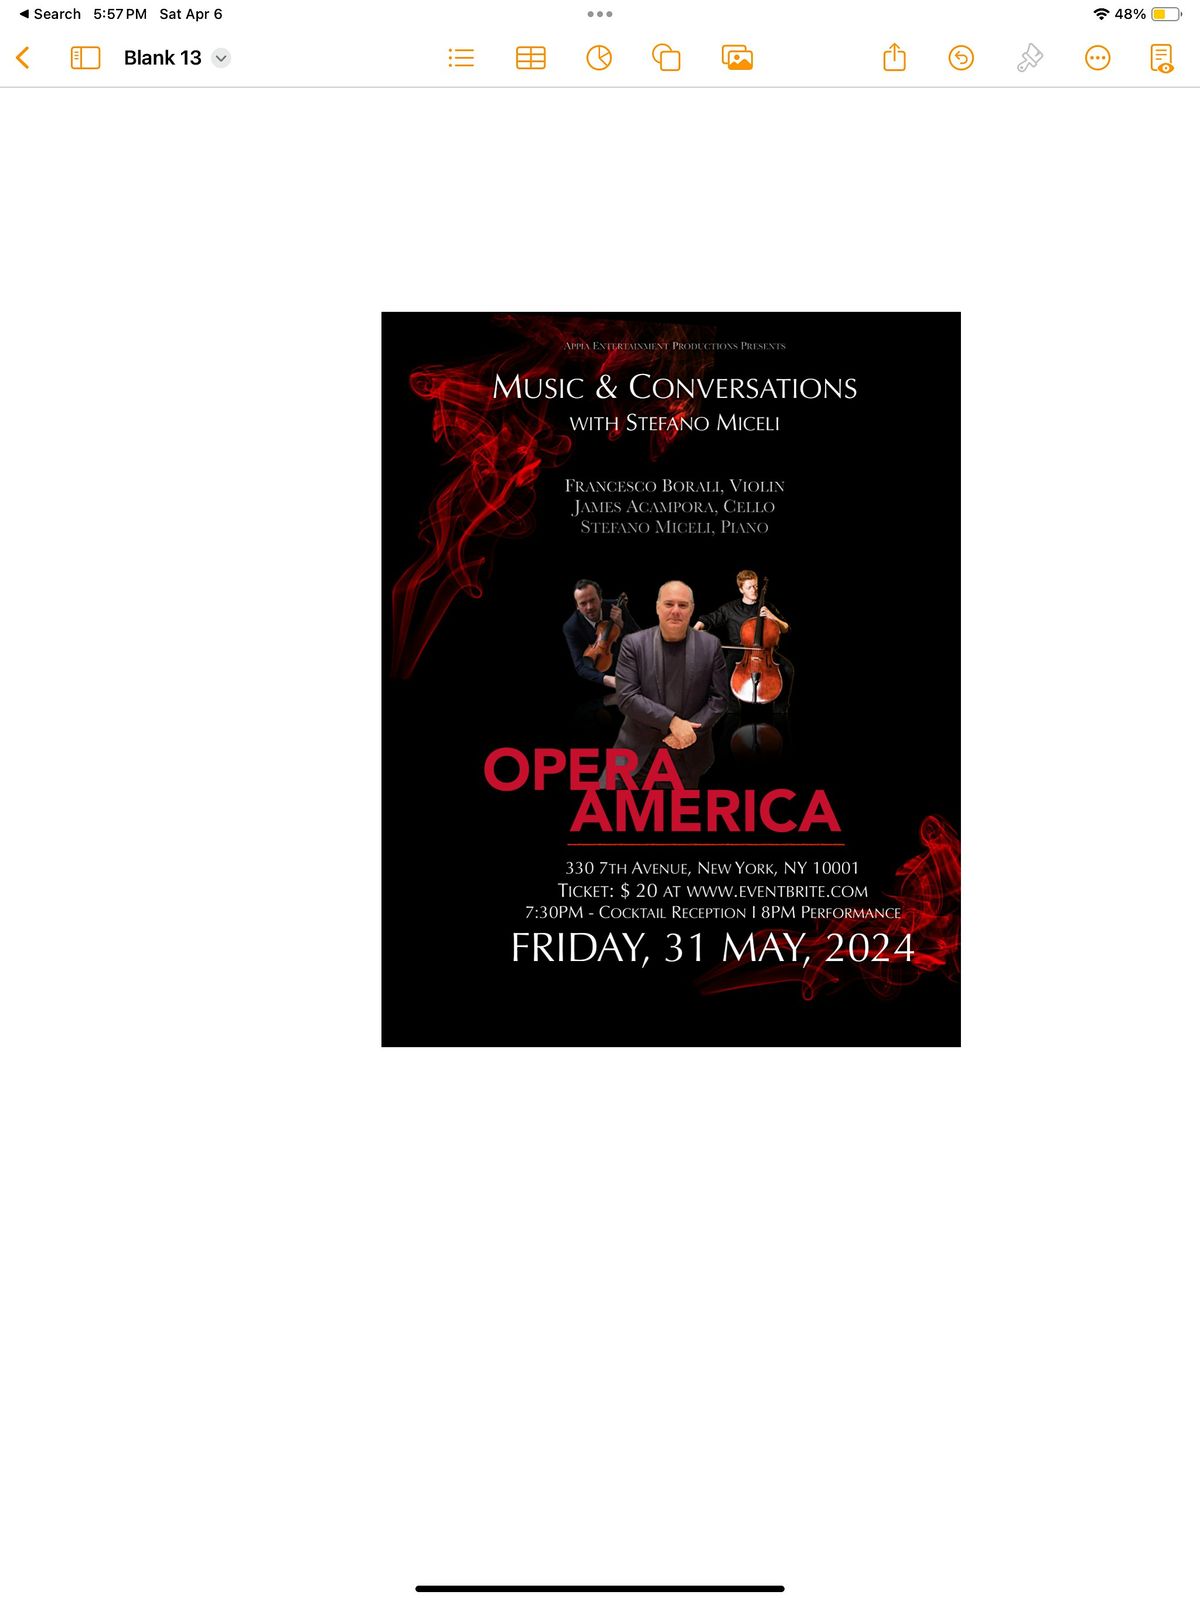 Opera America: Stefano Miceli with Francesco Borali and James Acampora